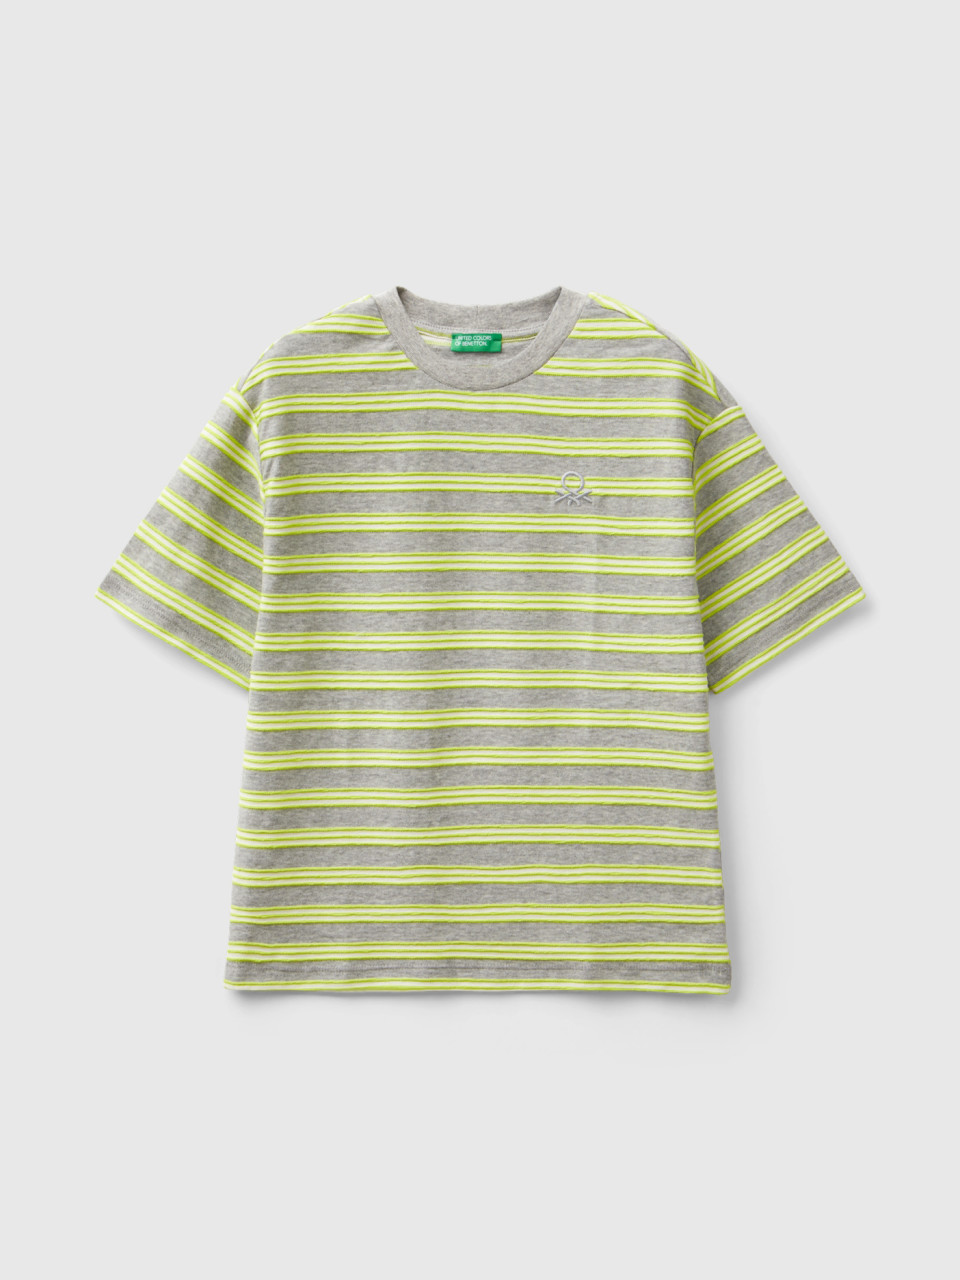 Benetton, Oversized Striped T-shirt, Light Gray, Kids